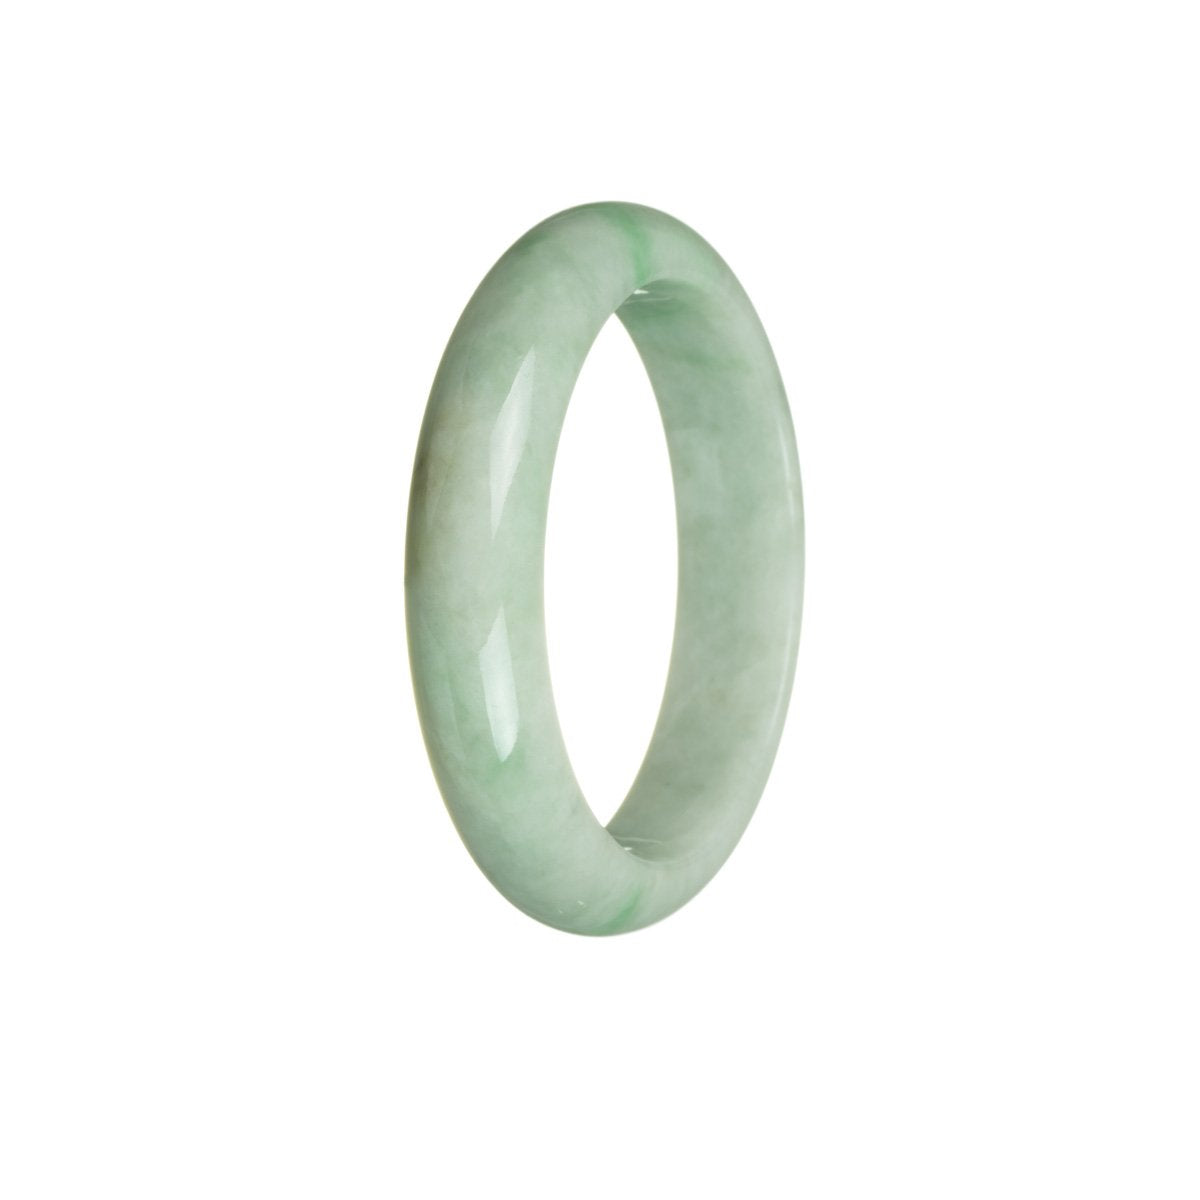 Genuine Untreated Green Jadeite Bangle Bracelet - 53mm Half Moon